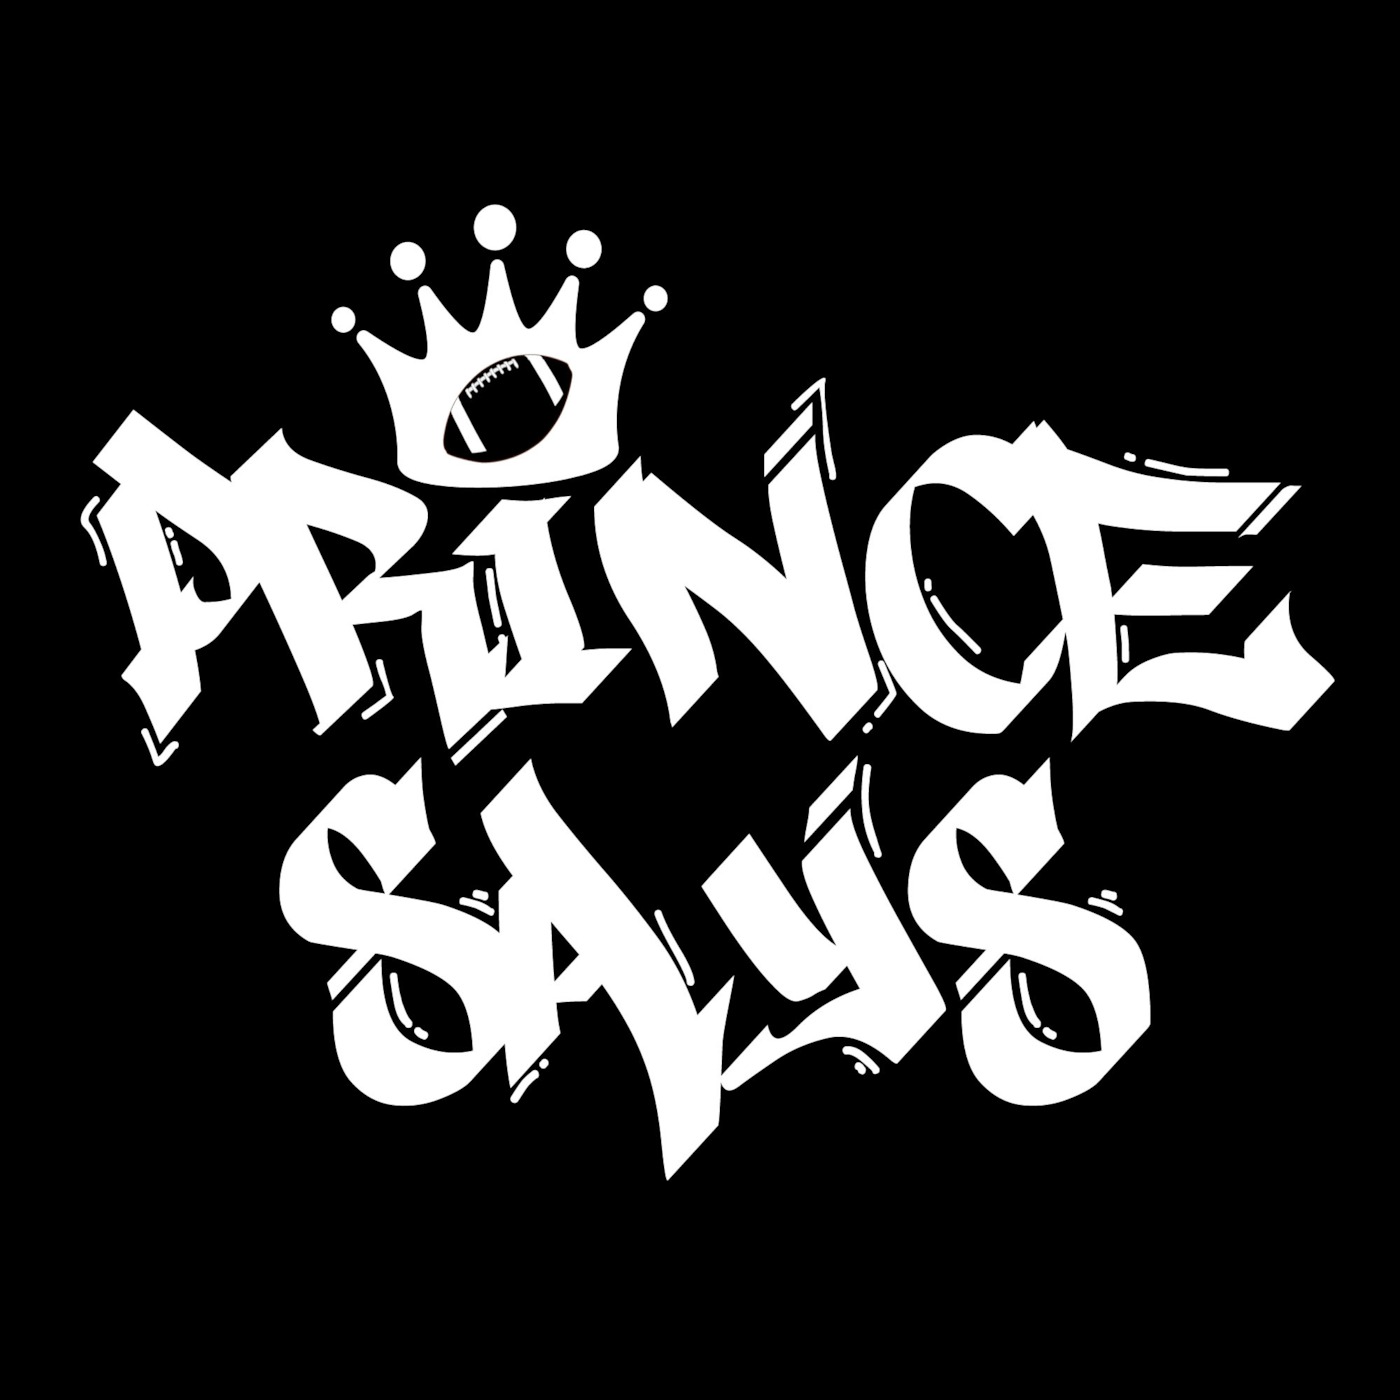 PrinceSays Podcast